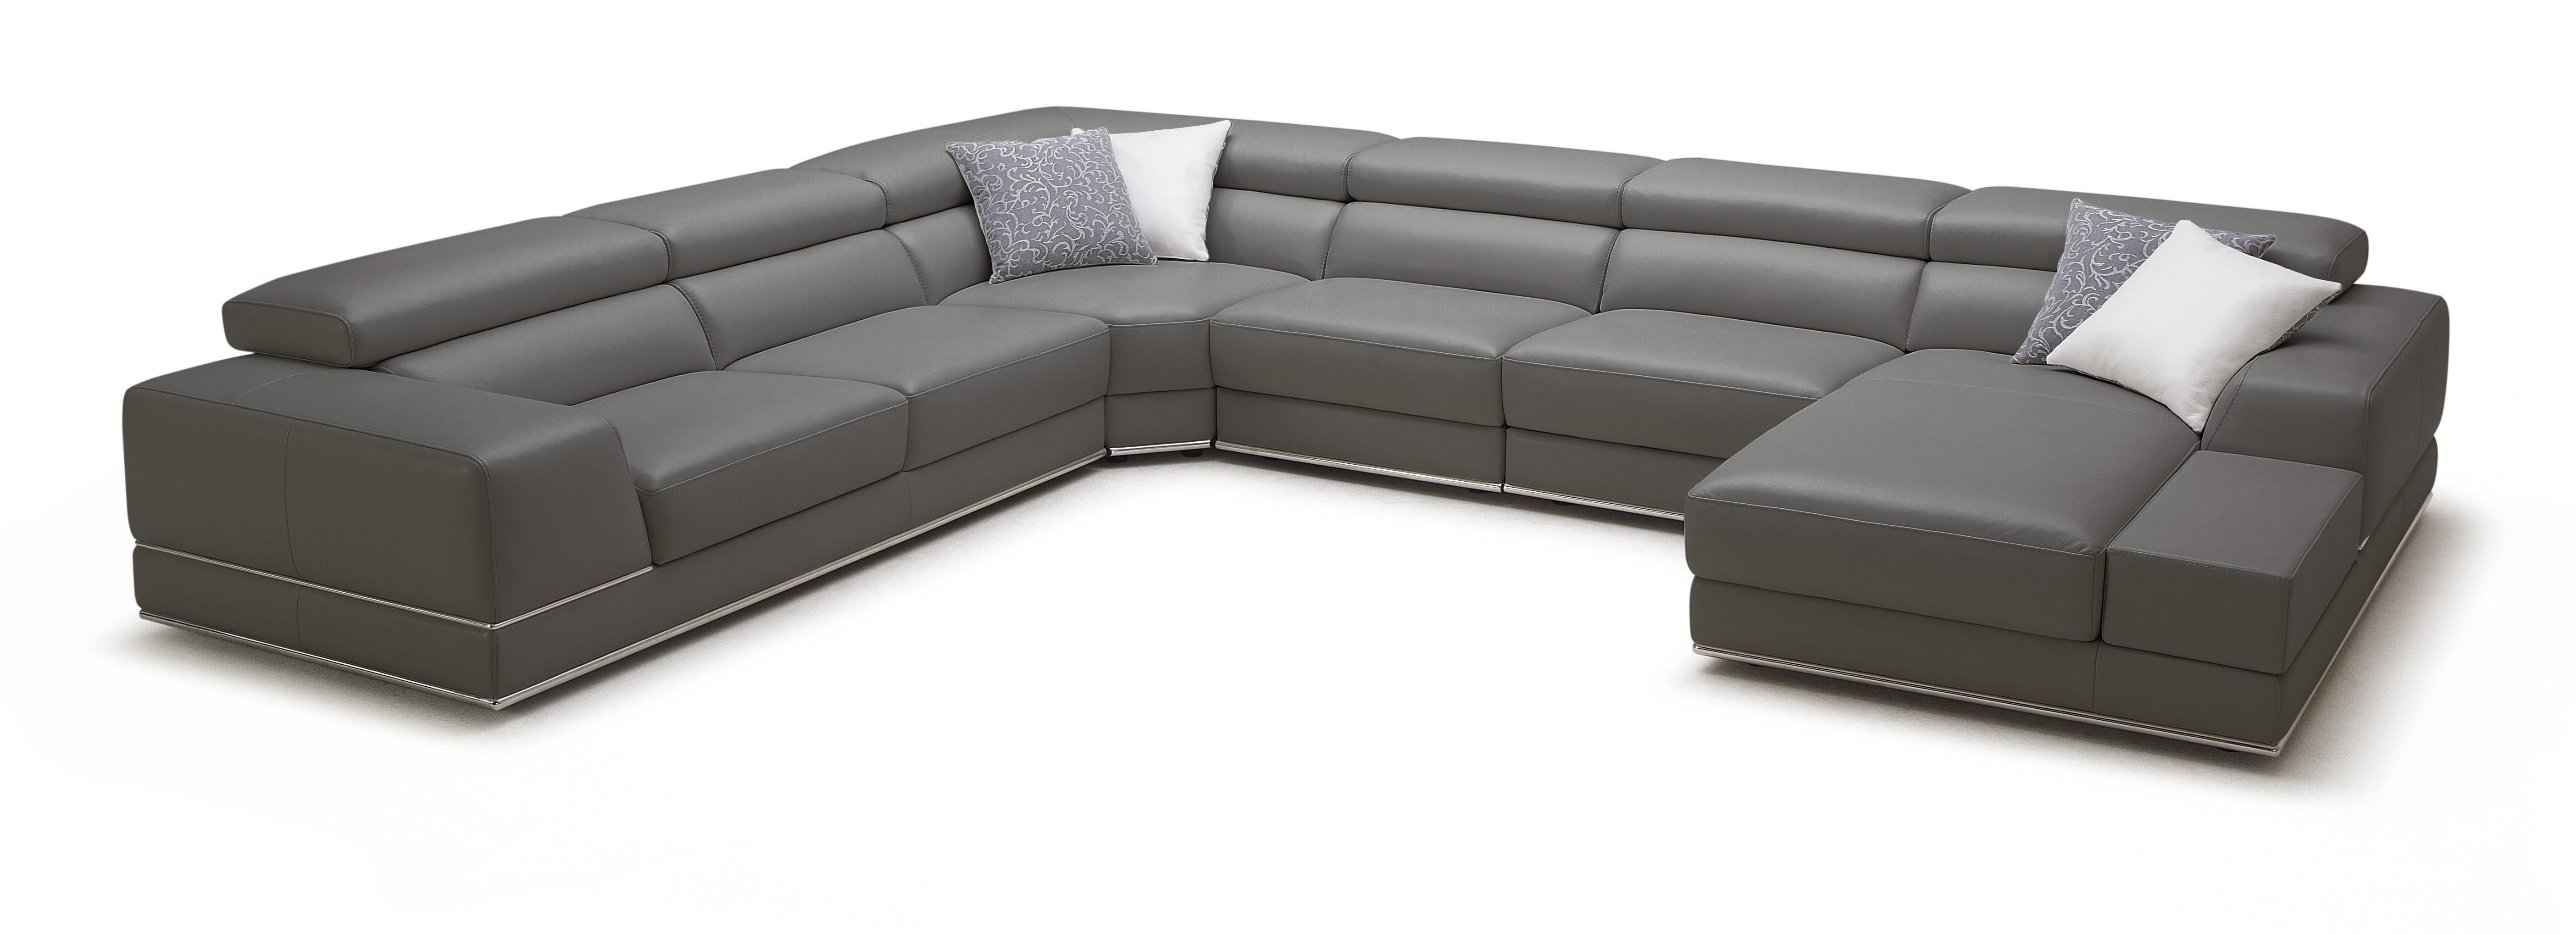 bergamo sectional leather modern sofa white